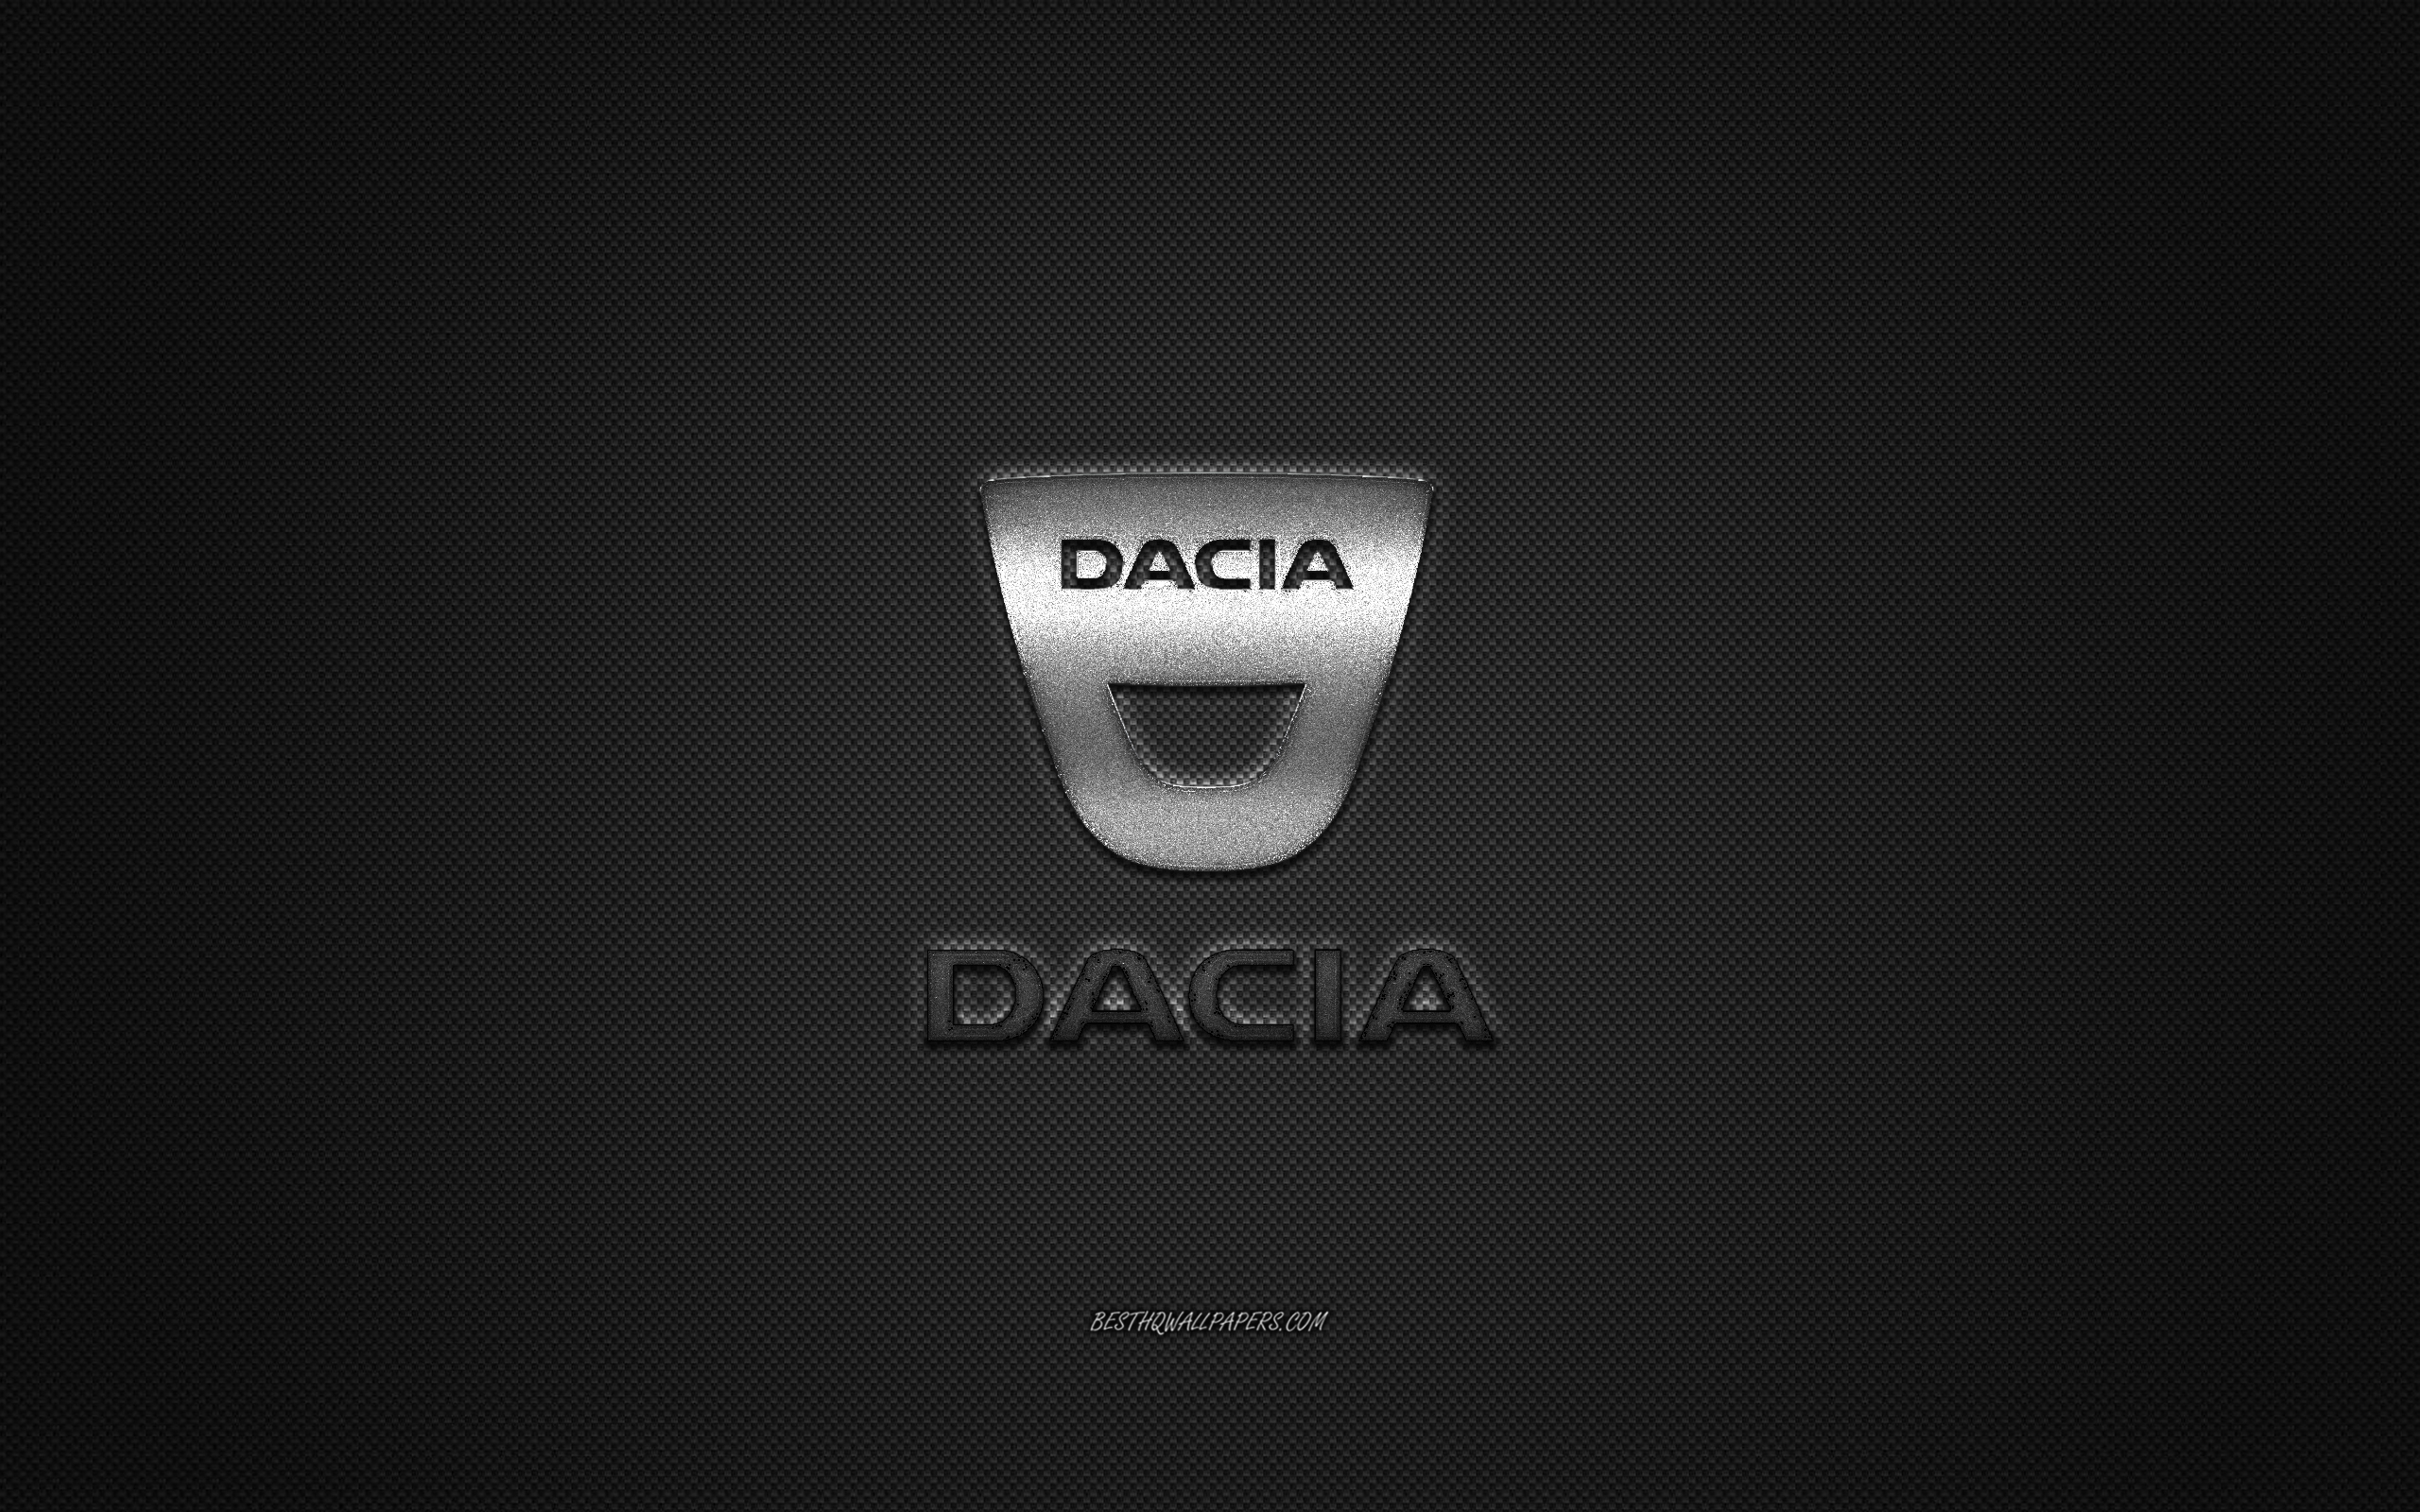 Dacia Wallpapers